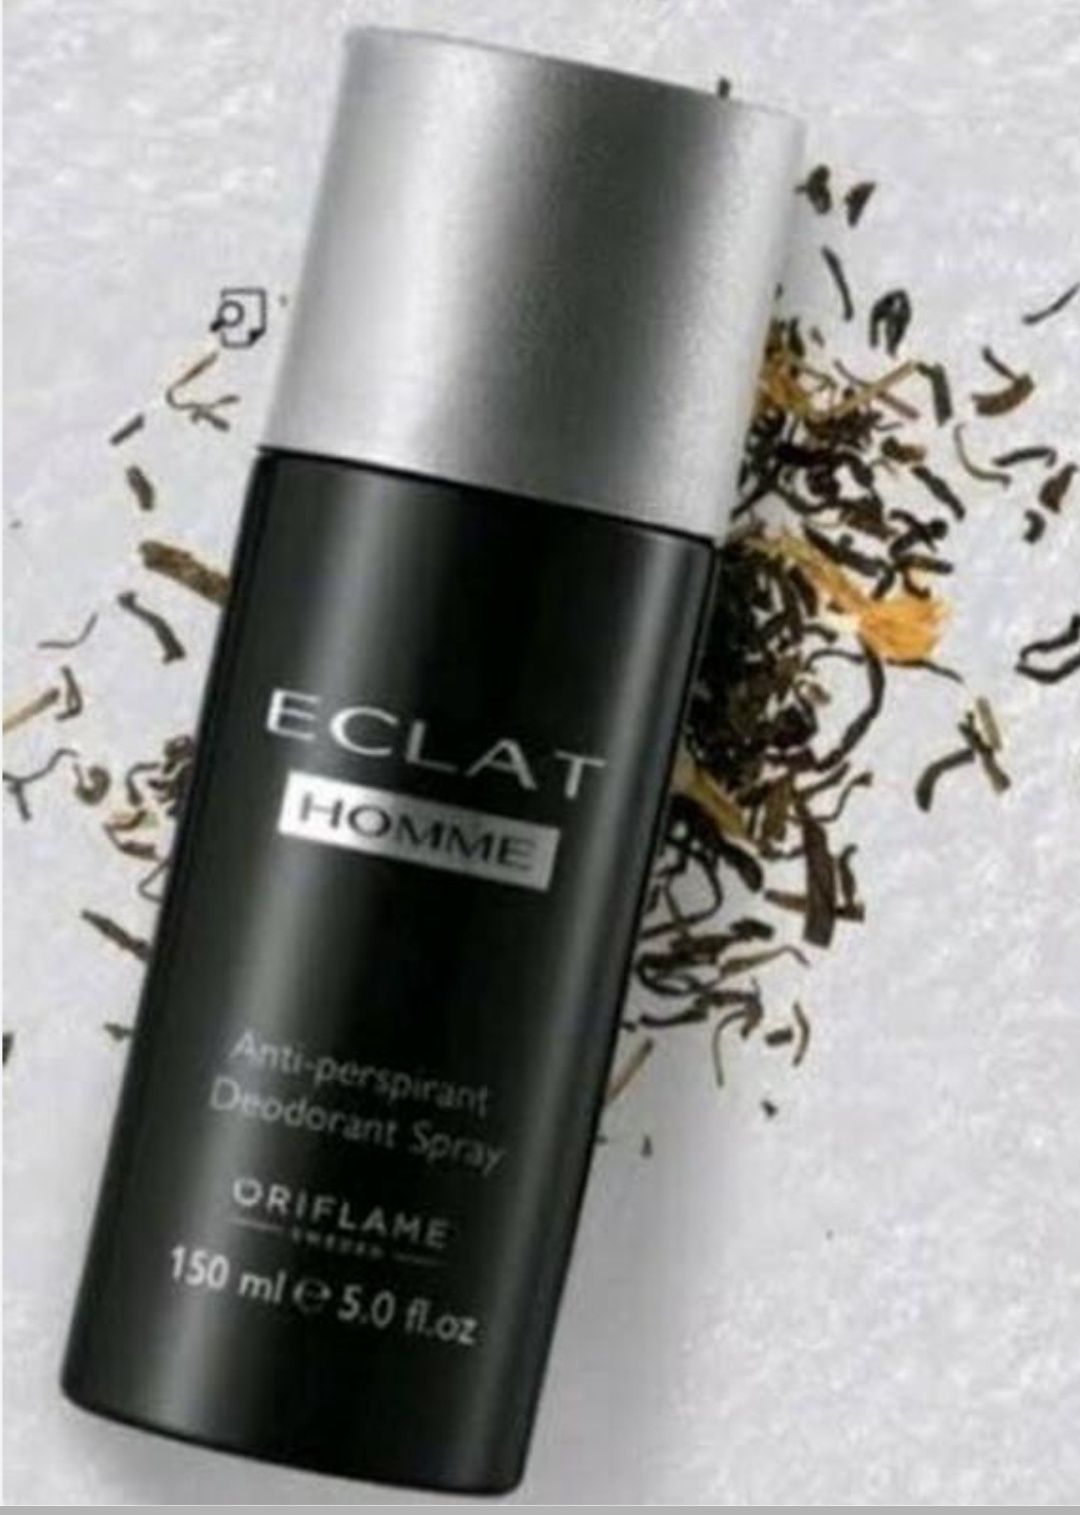 Oriflame Eclat Homme - spray, dezodorant antyperspiracyjny 150 ml